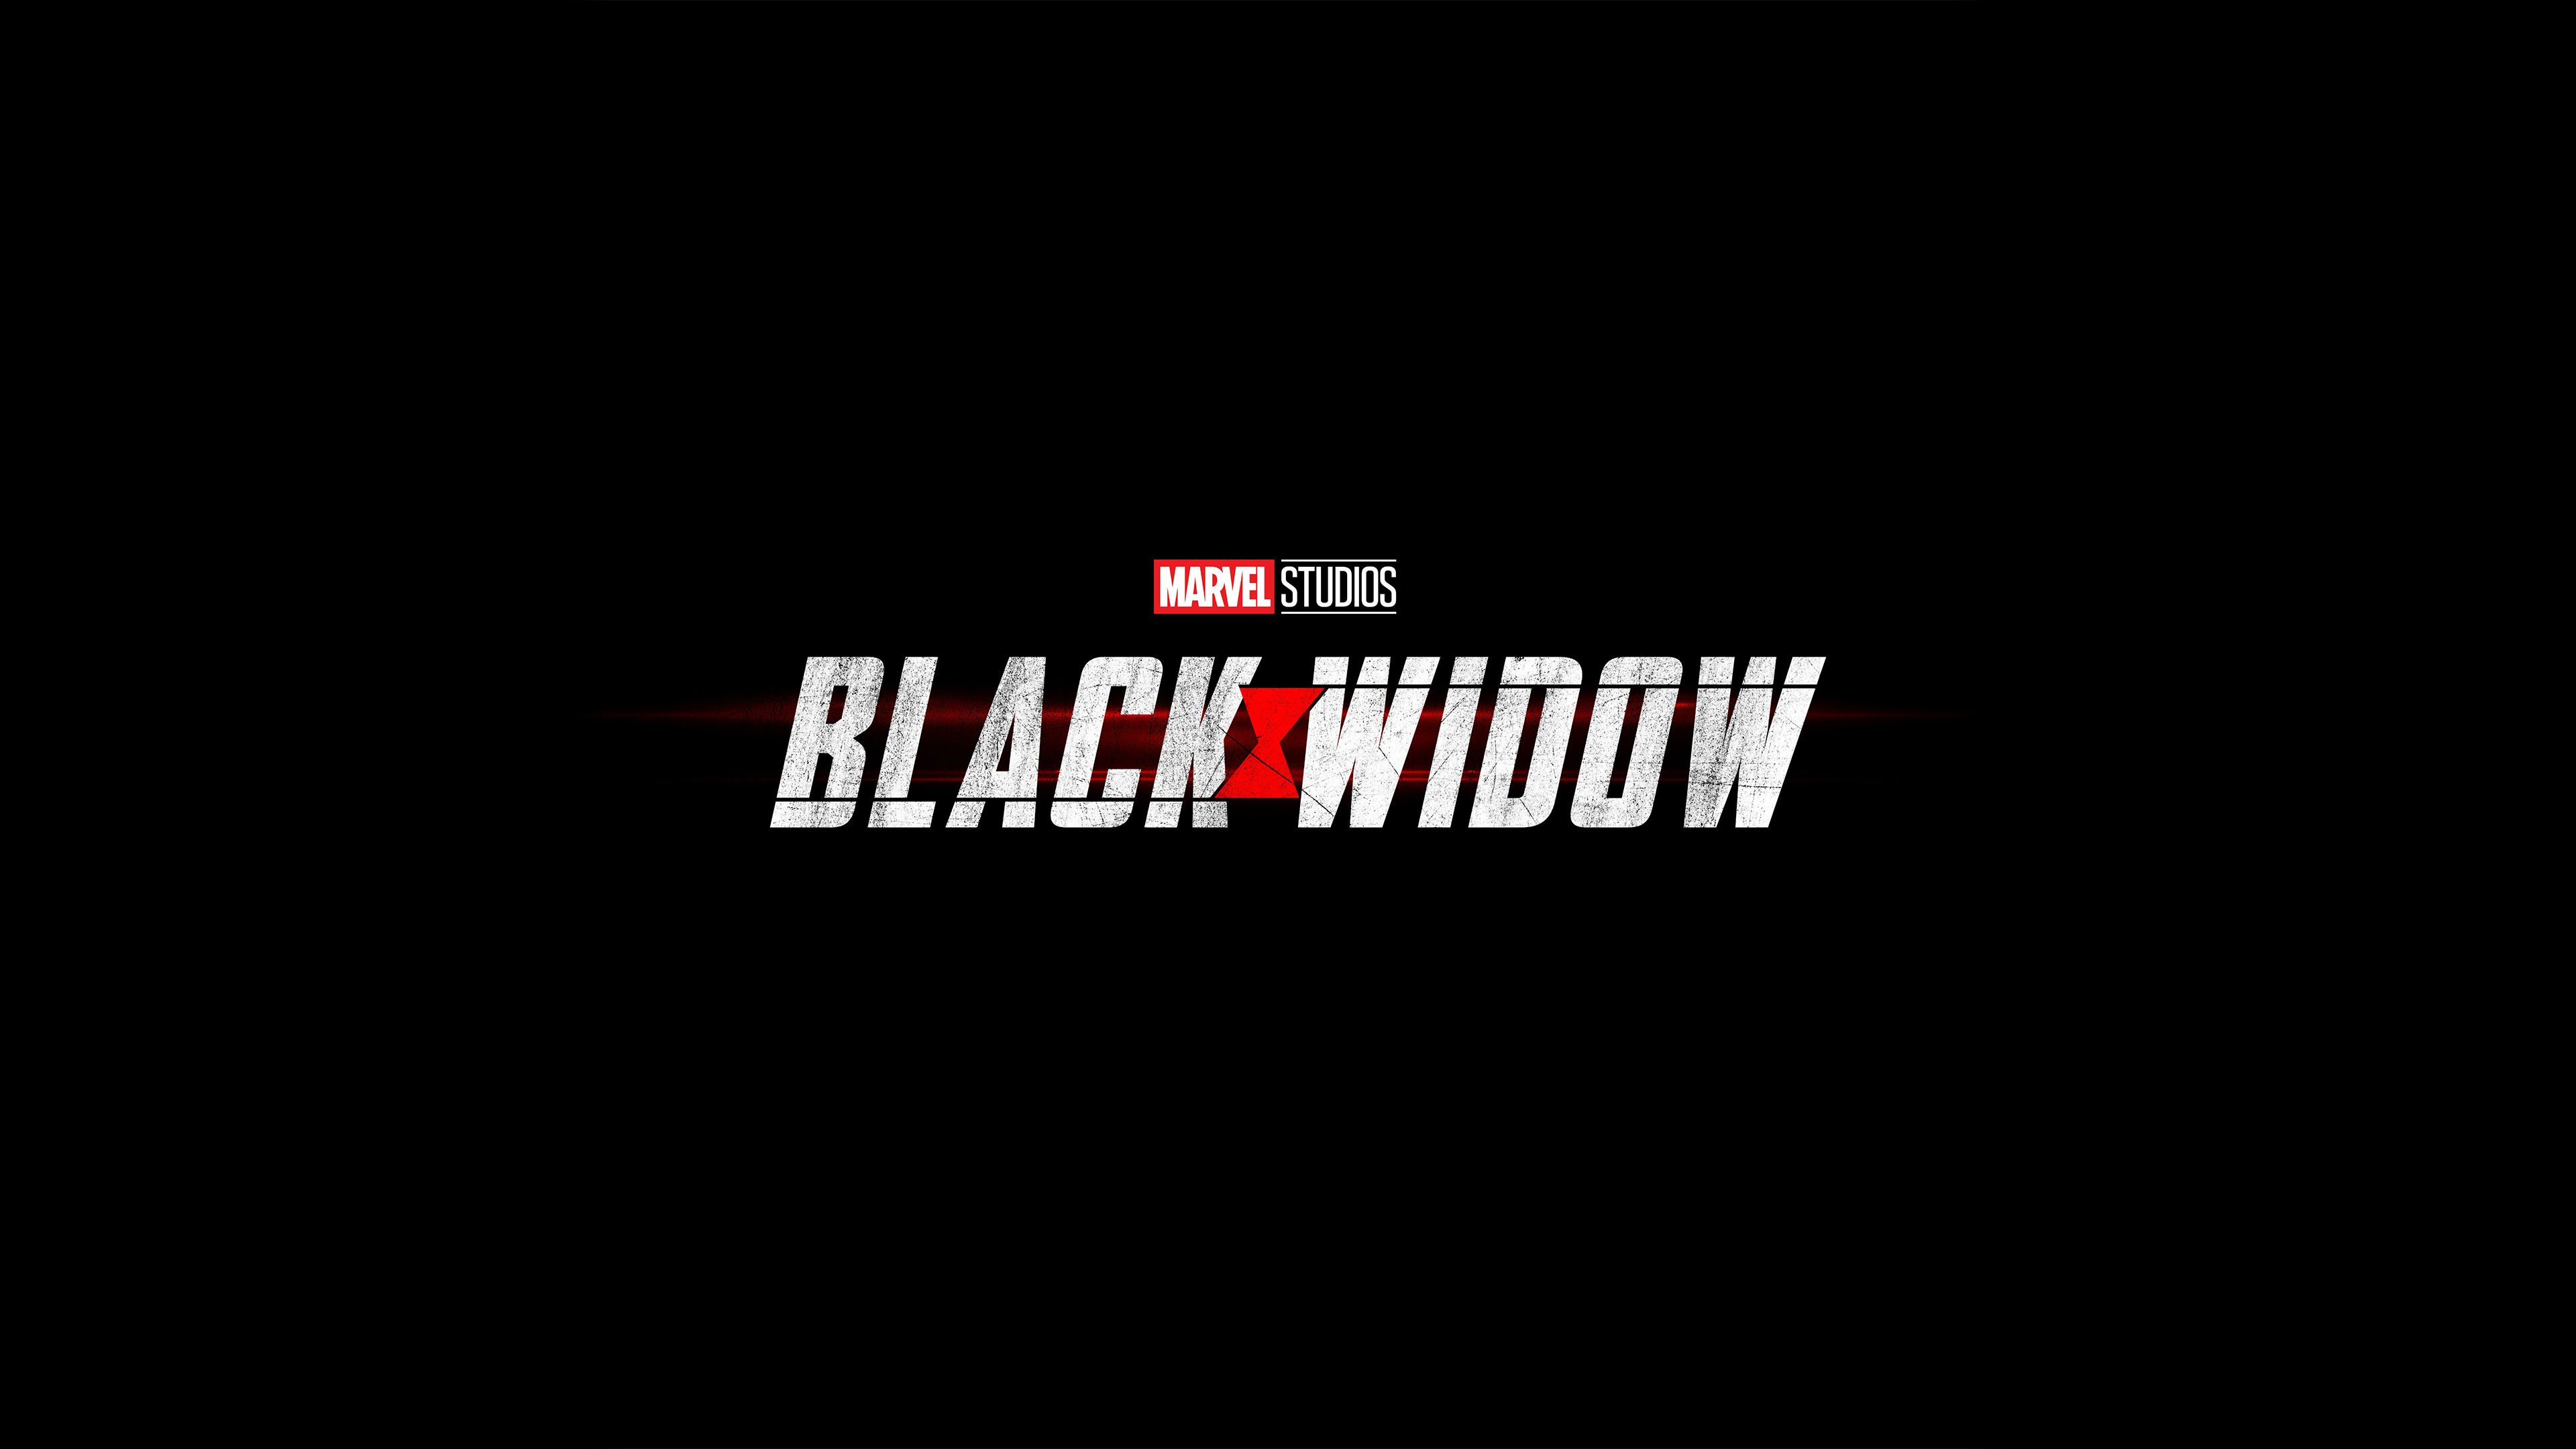 Wallpaper 4k Black Widow 2020 Movie 2020 movies wallpaper, 4k